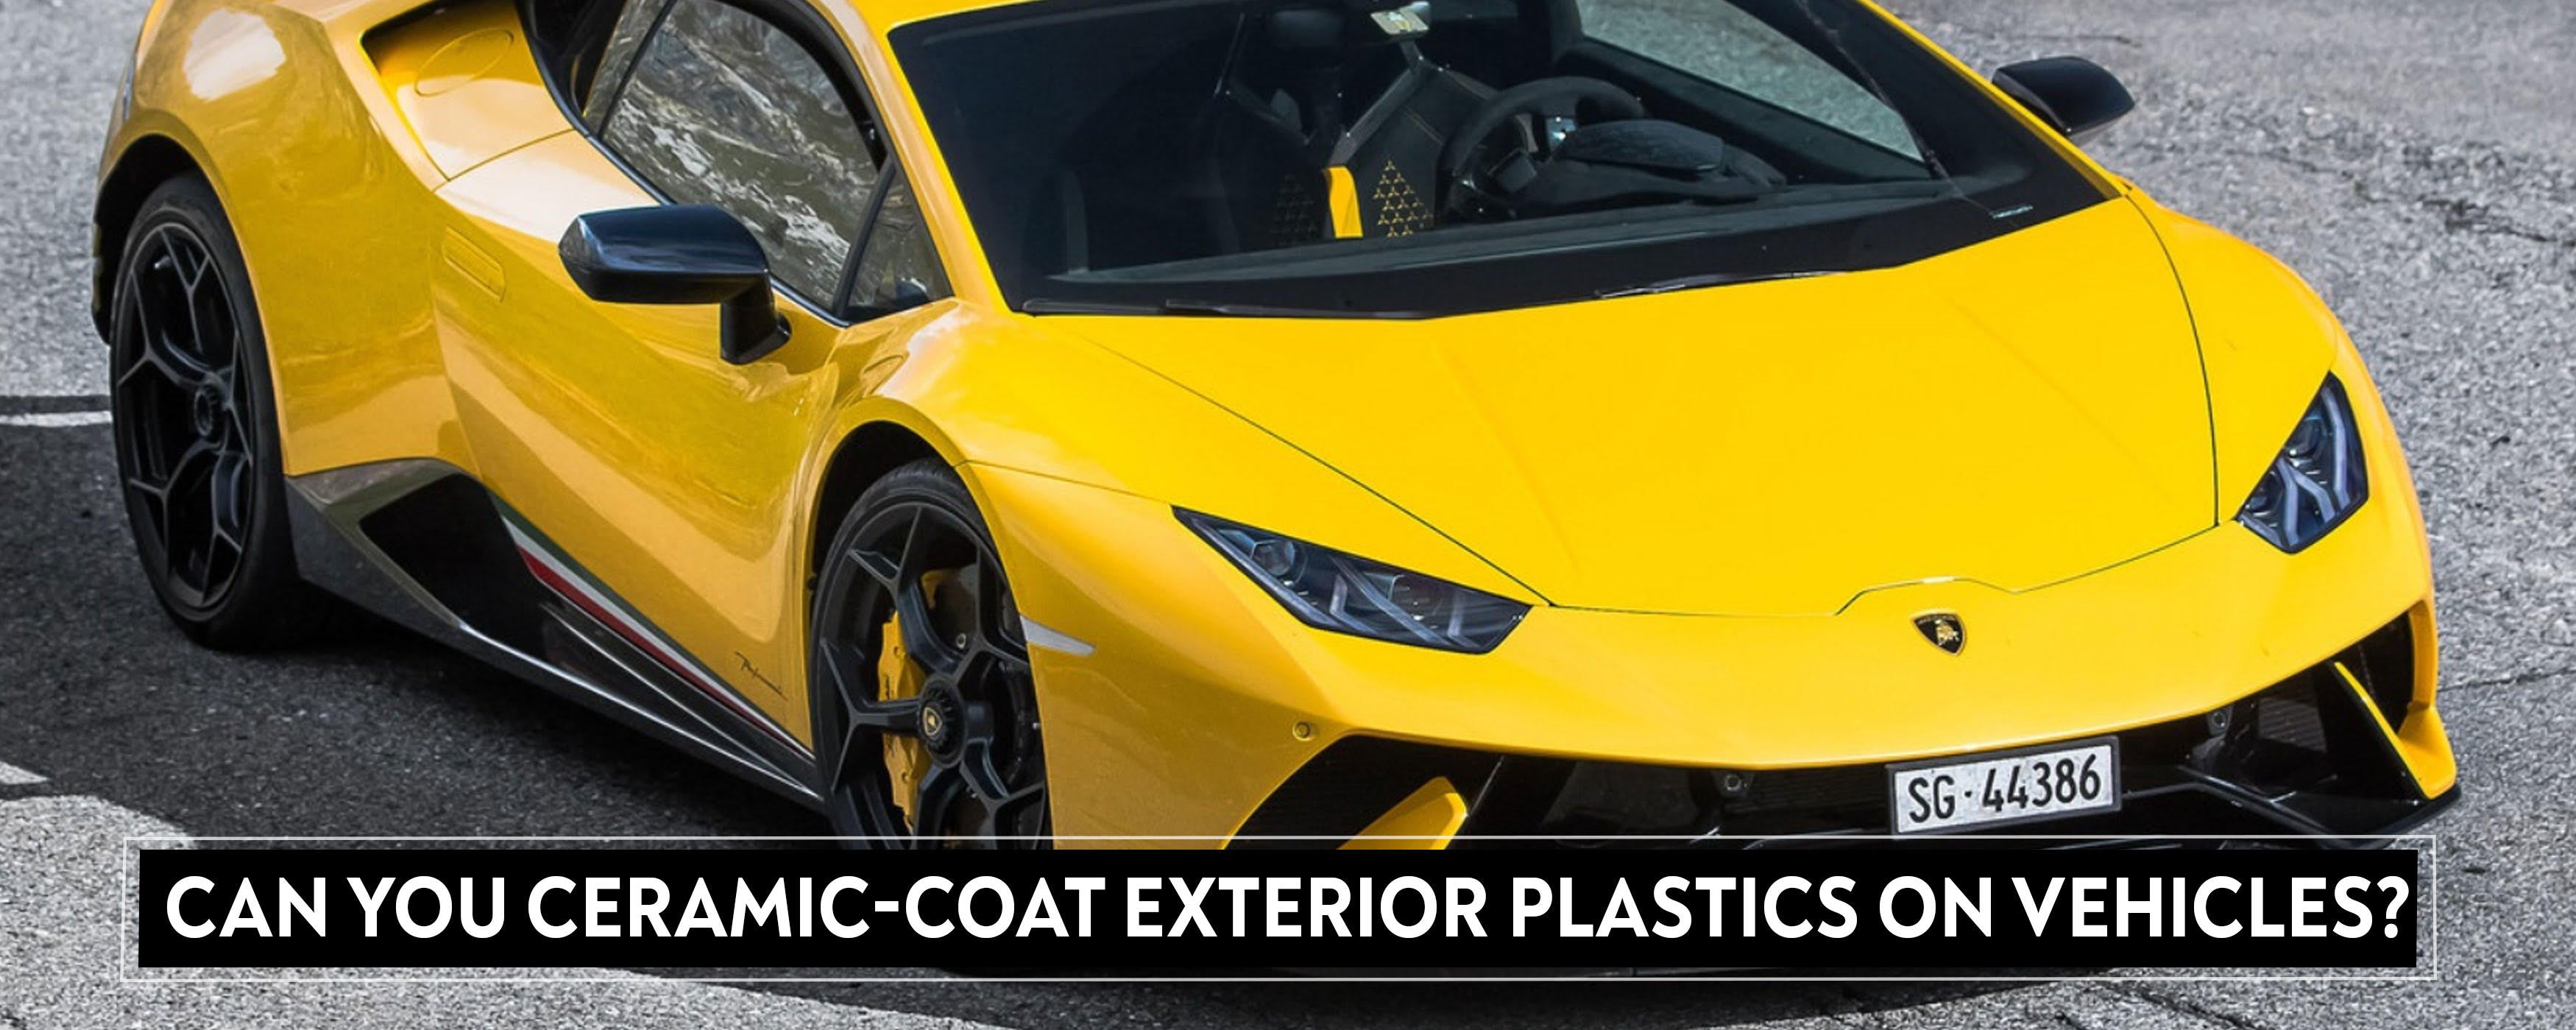 Can You Ceramic-Coat Exterior Plastics on Vehicles?